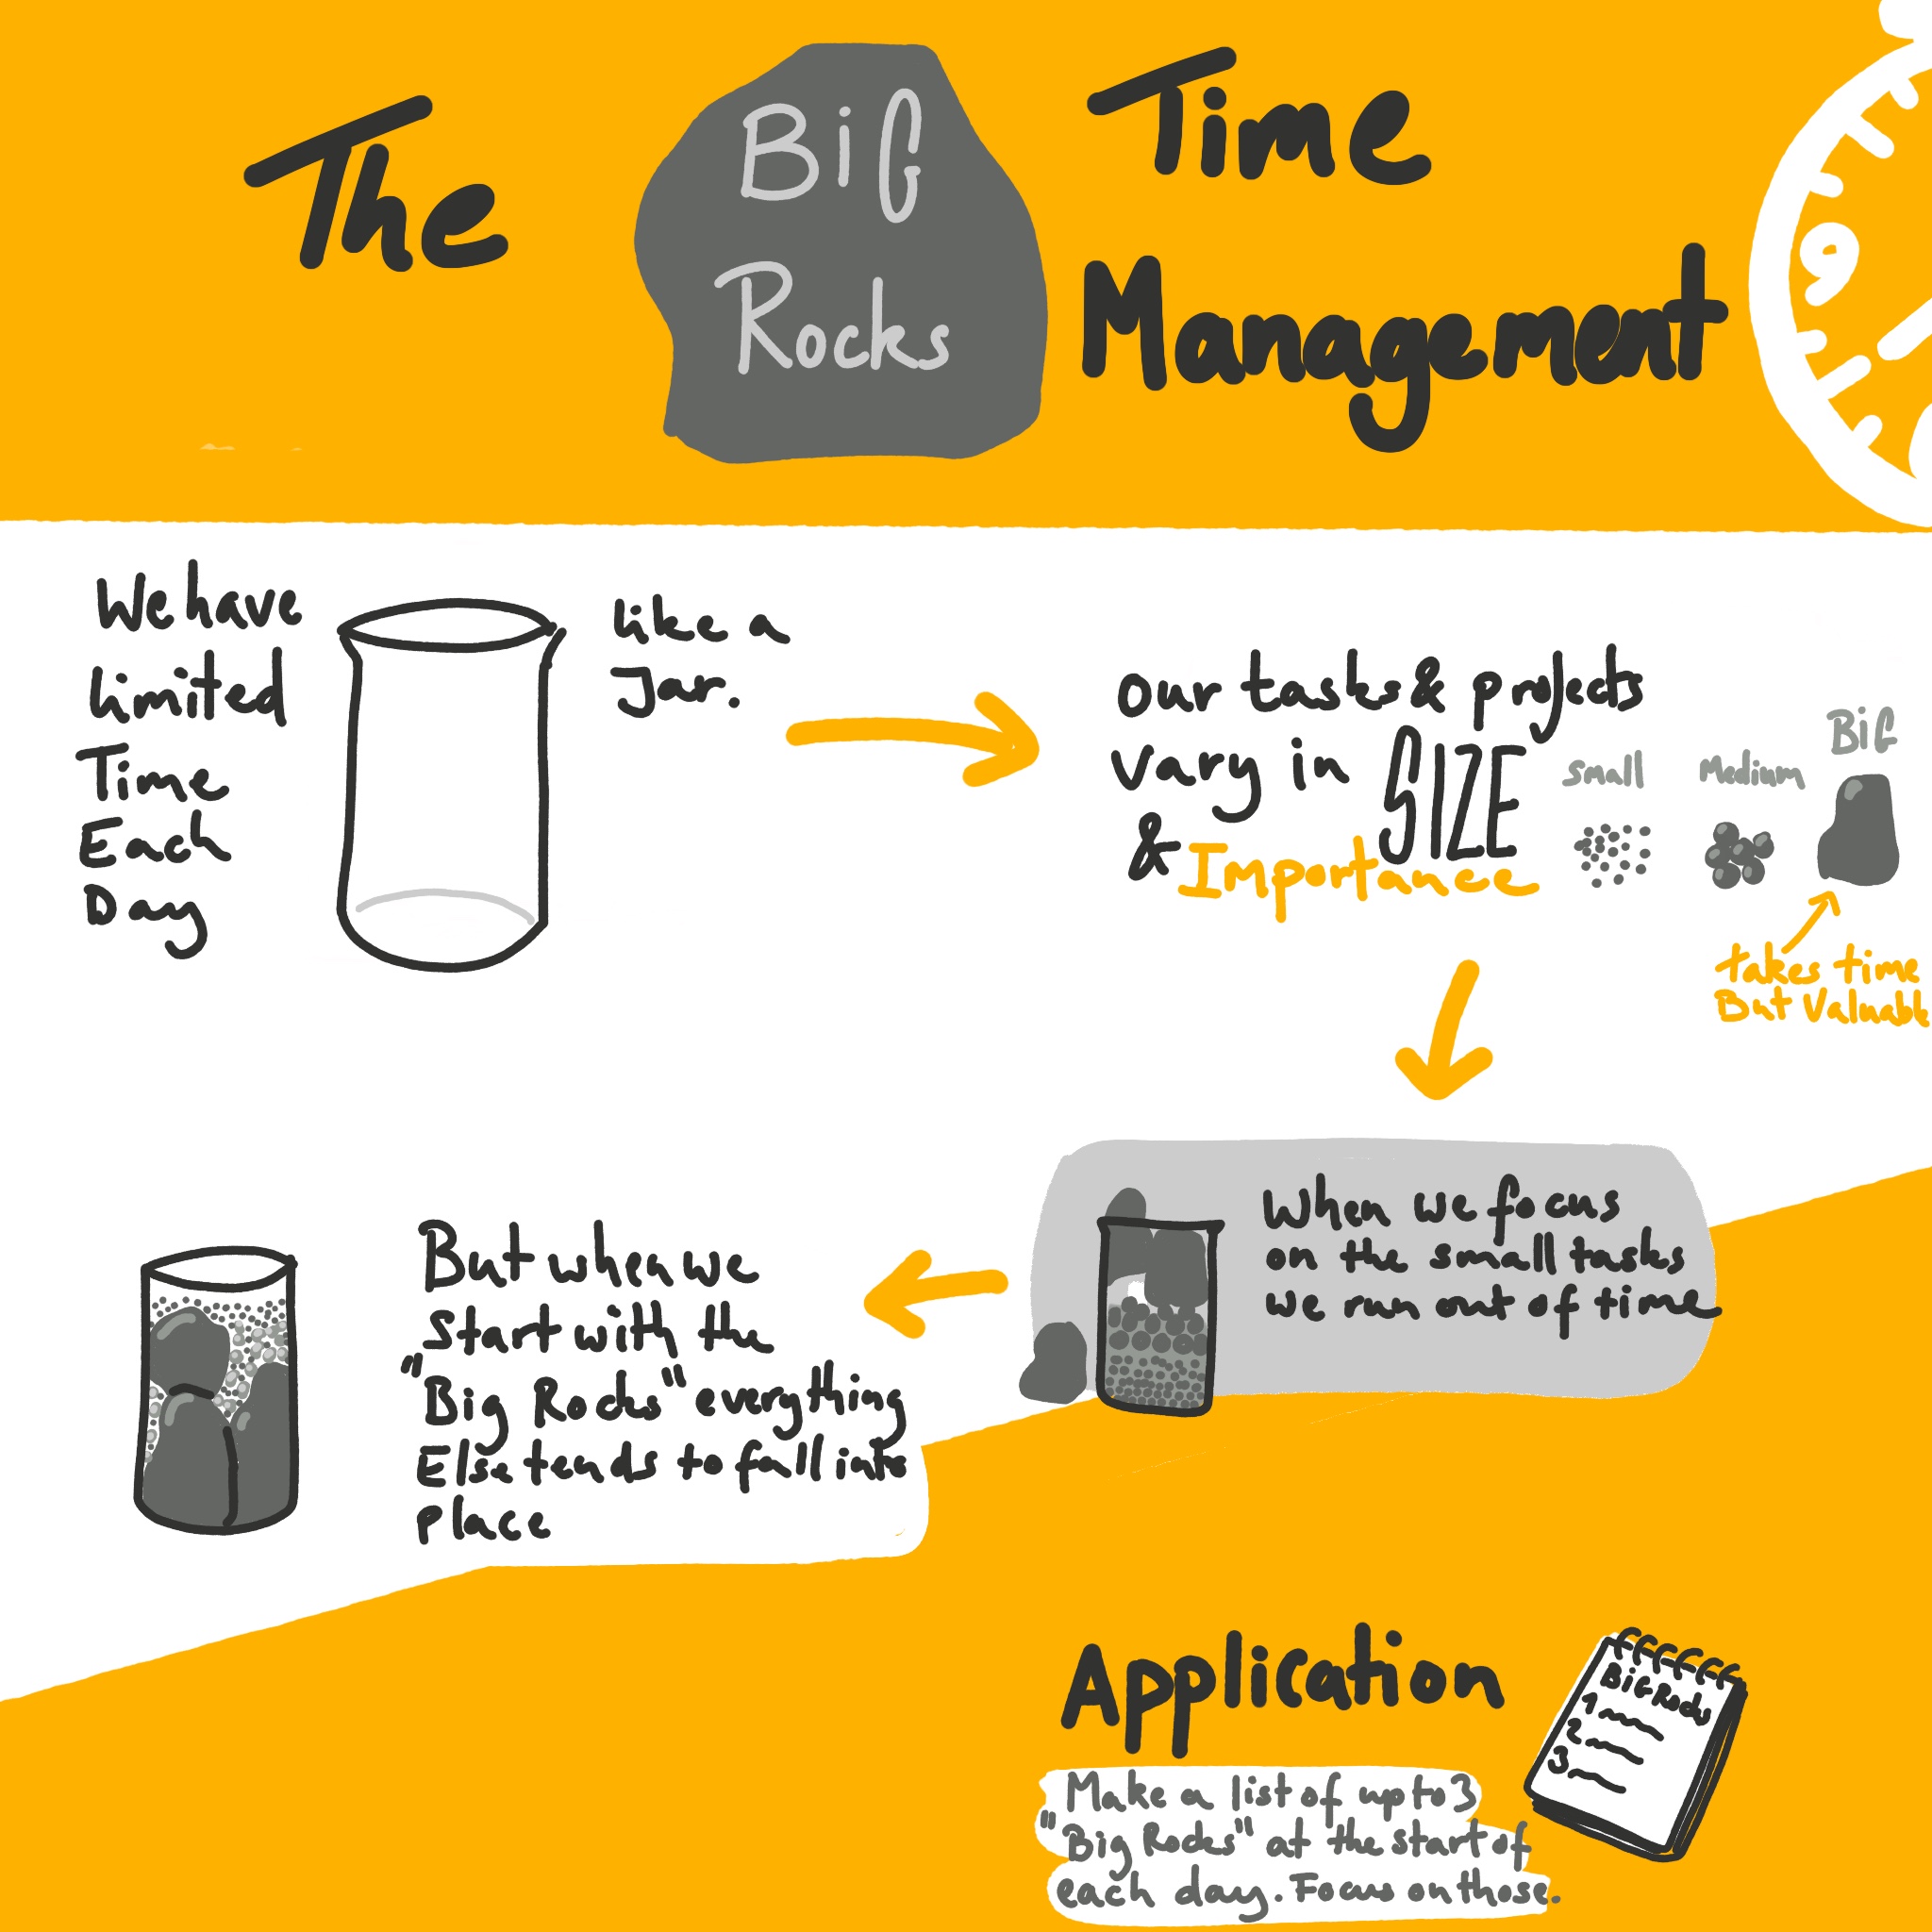 The Big Rocks Time Management Approach [Sketchnote]